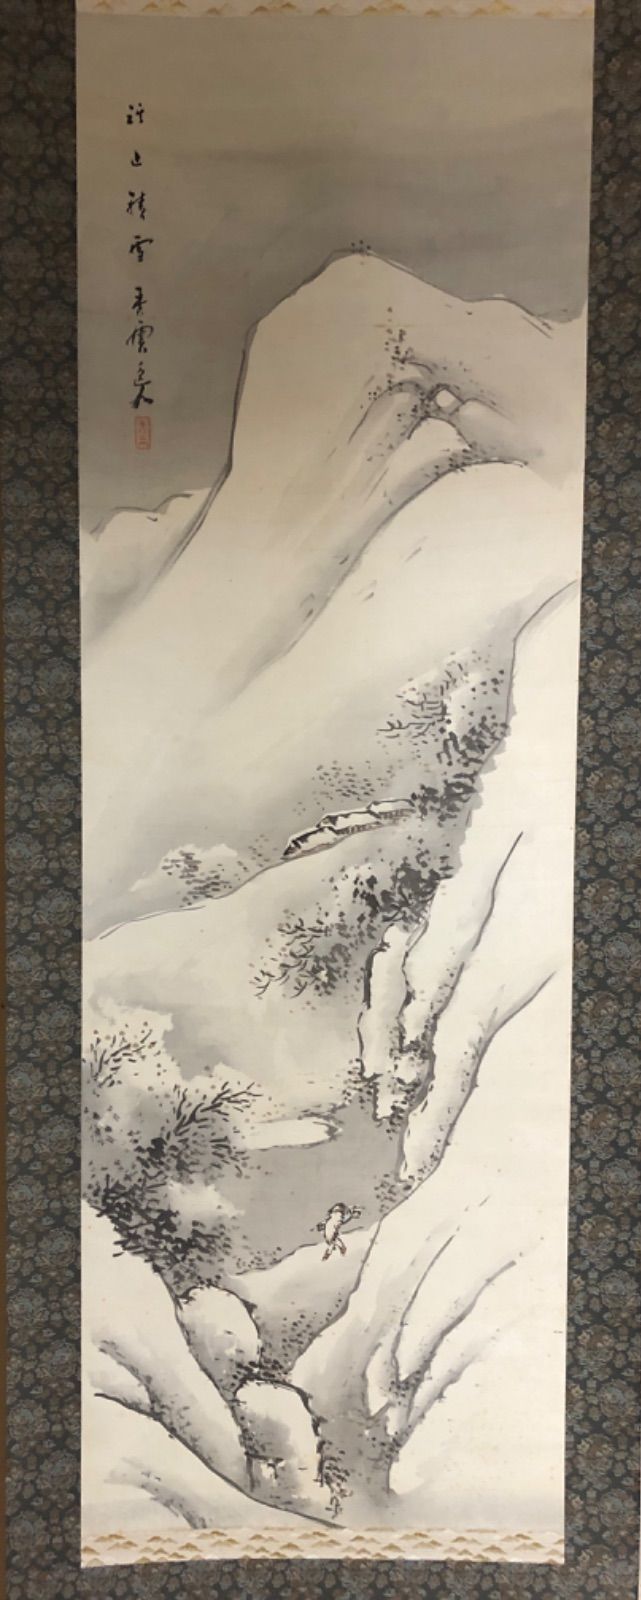 掛軸 山水図 香雲筆 肉筆 絹紙 共箱 骨董 日本の山野風景 - メルカリ